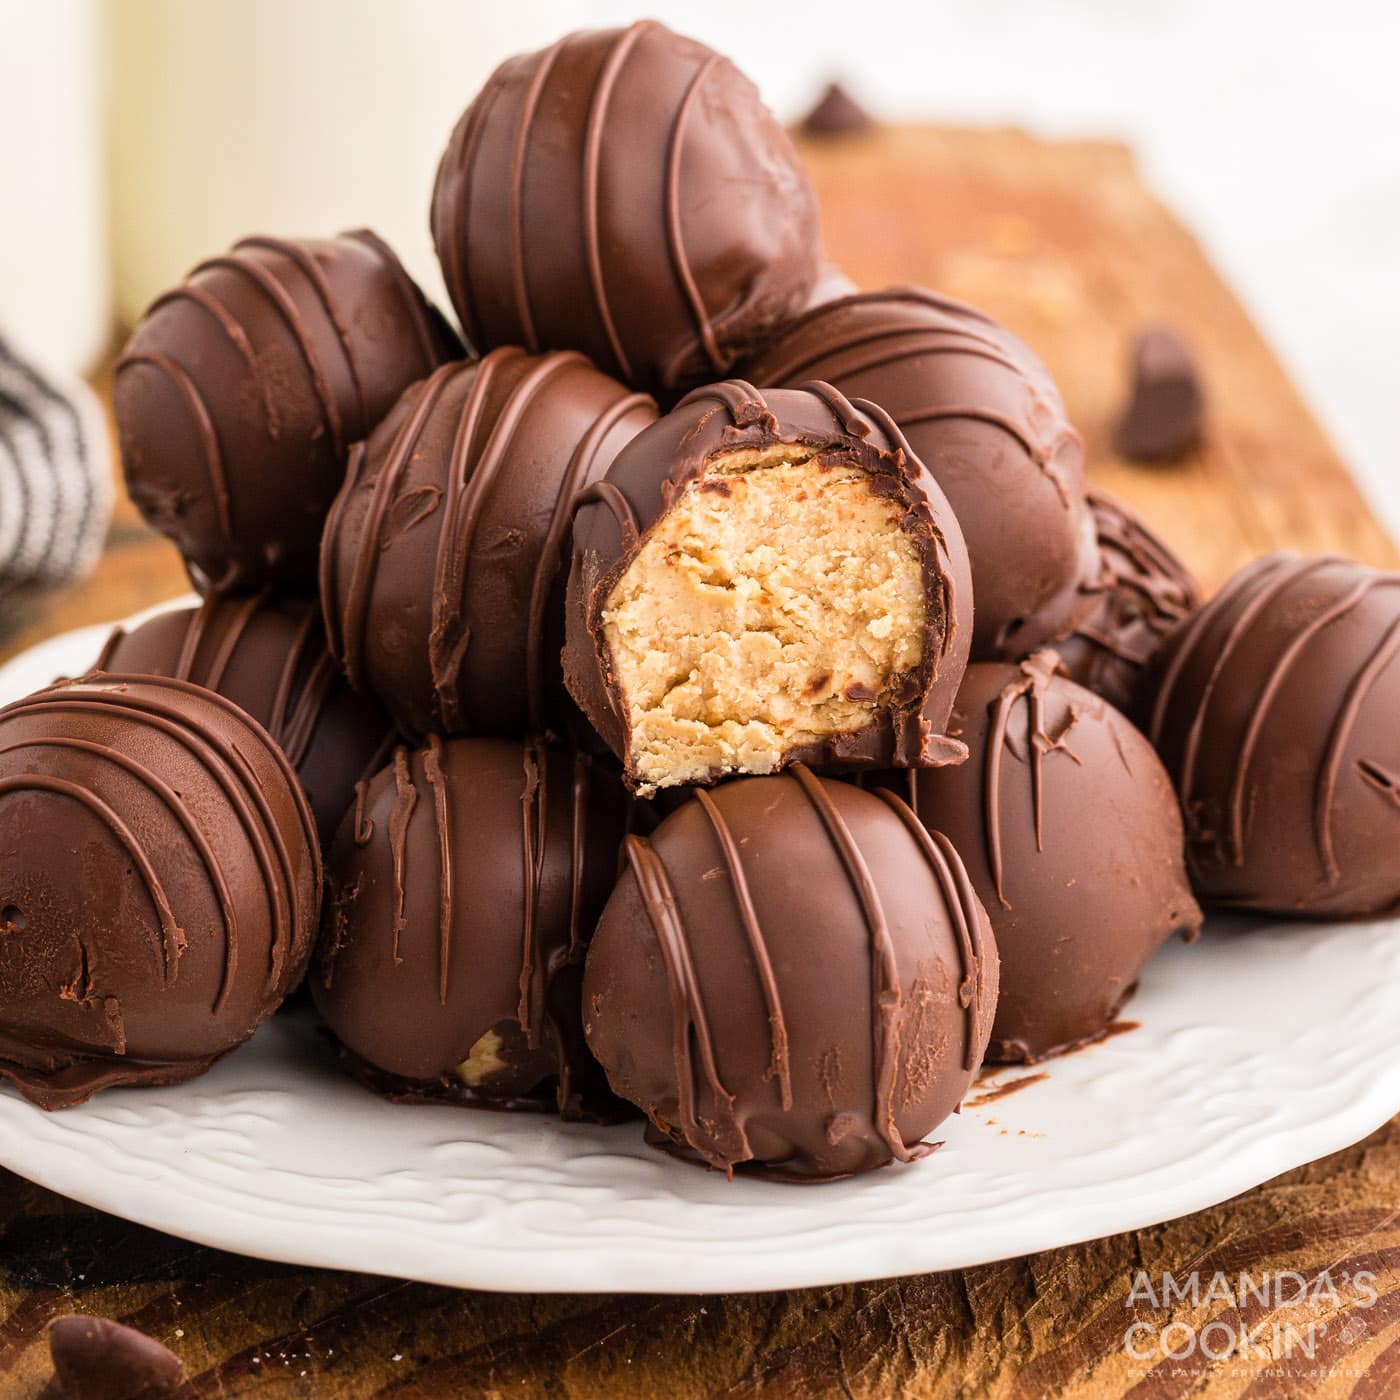 Chocolate Peanut Butter Balls - Amanda's Cookin' - No Bake Desserts